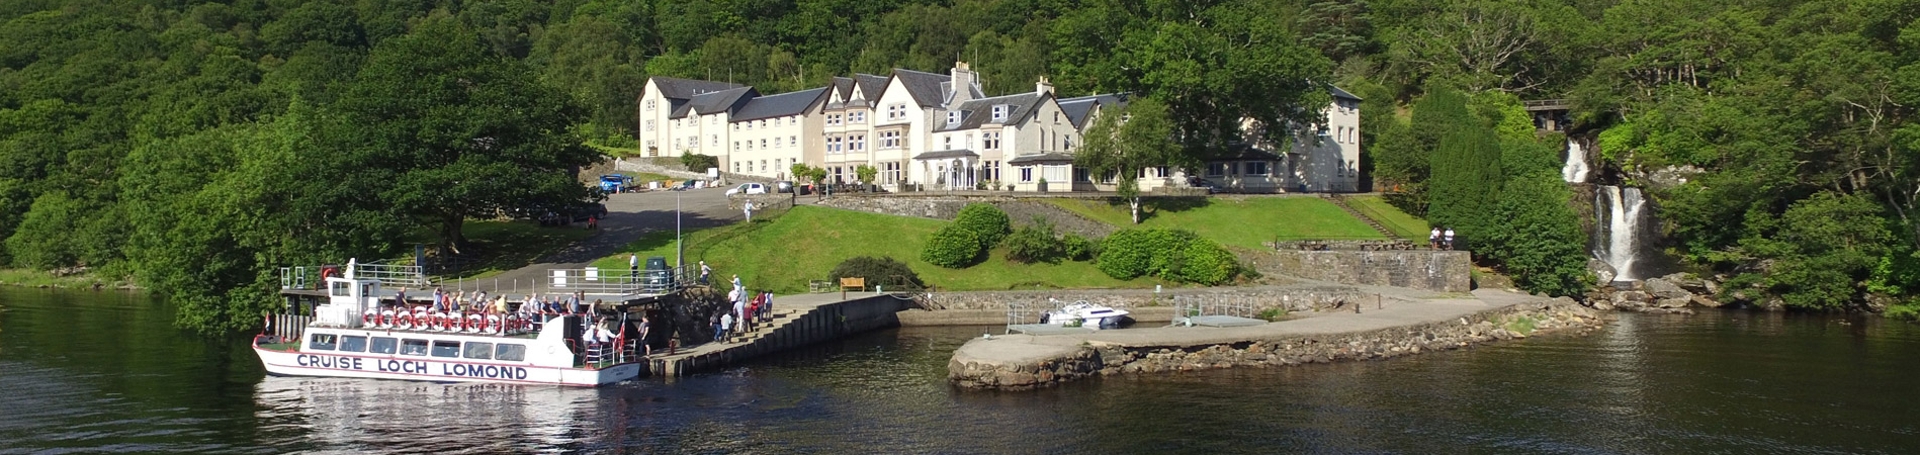 The Inversnaid Hotel overlooking Loch Lomond